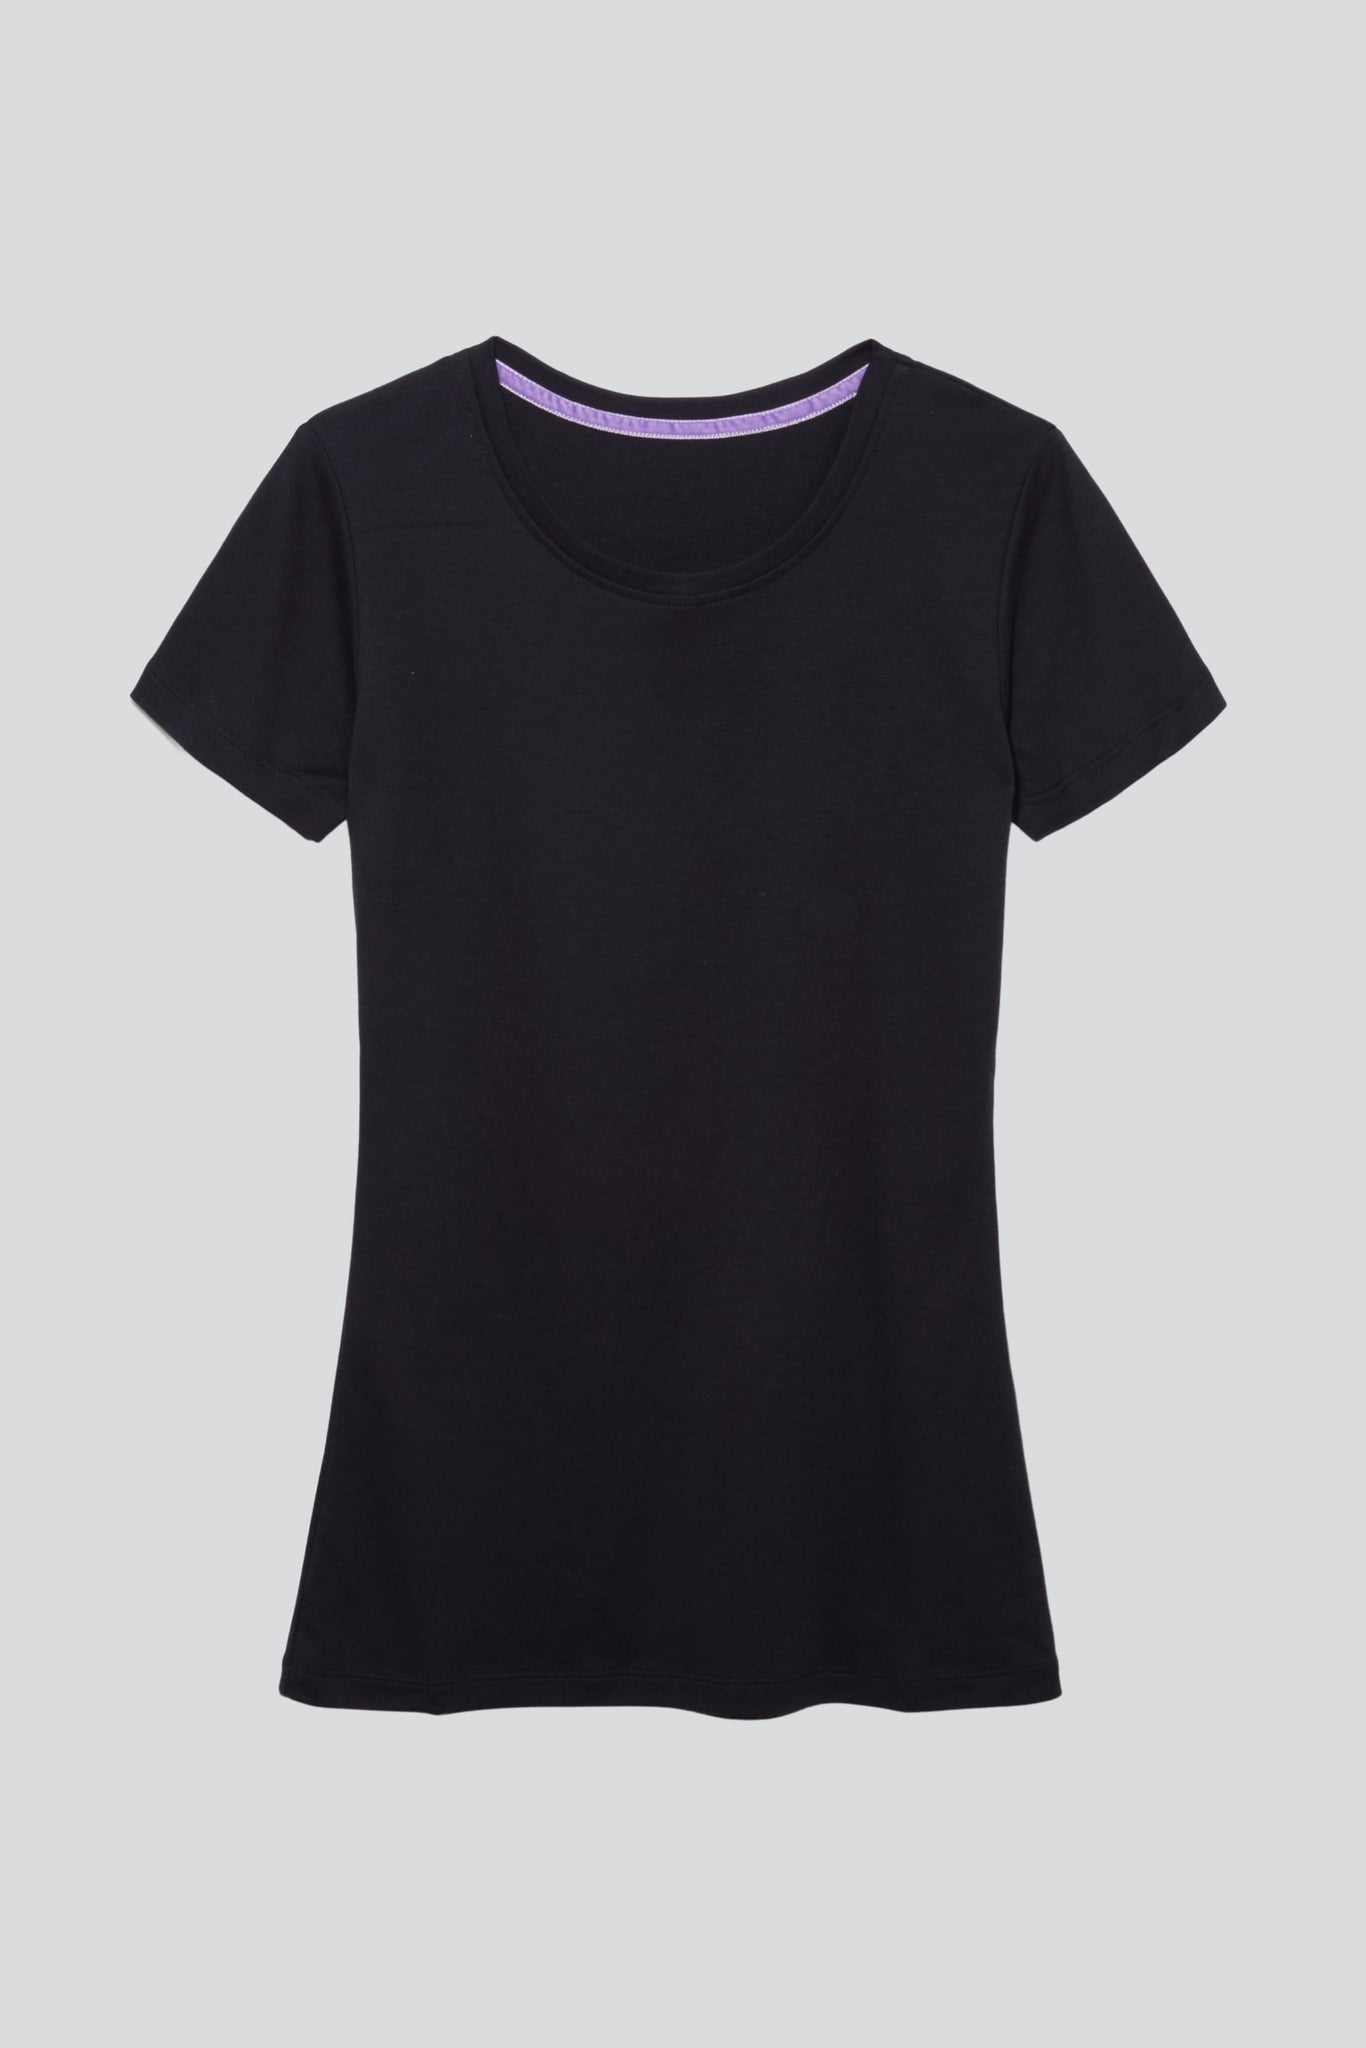 Neck Lavender Crew | Modal T-shirt Blend Cotton Clothing Sleeve Short Hill